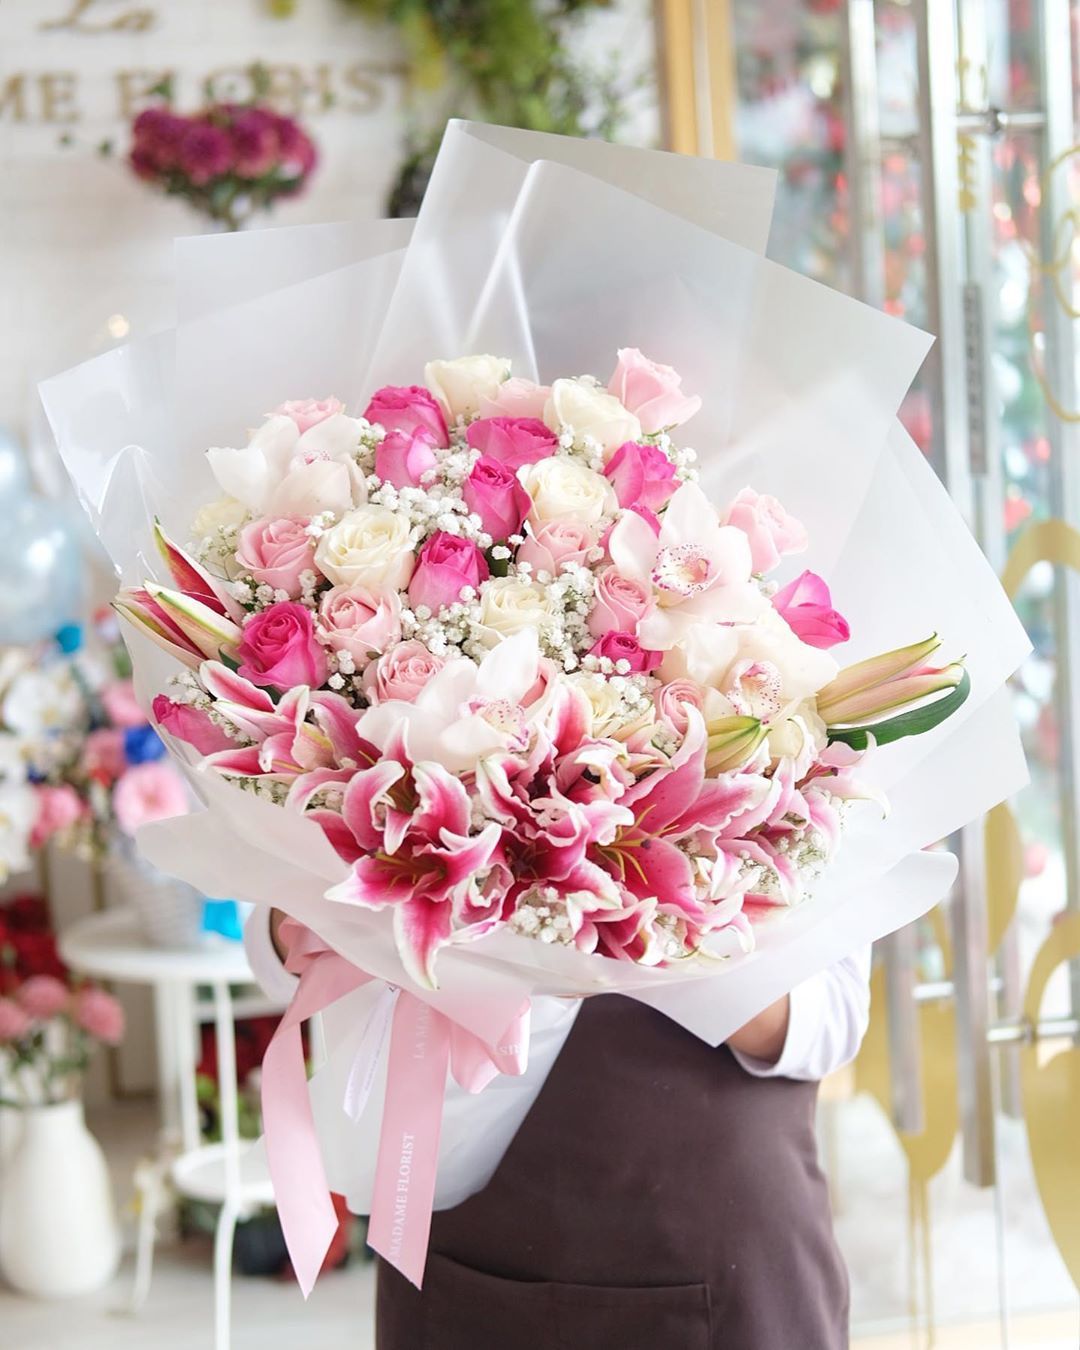 7 Florist Jakarta Dengan Buket Mewah Yang Pas Untuk Hadiah Valentine